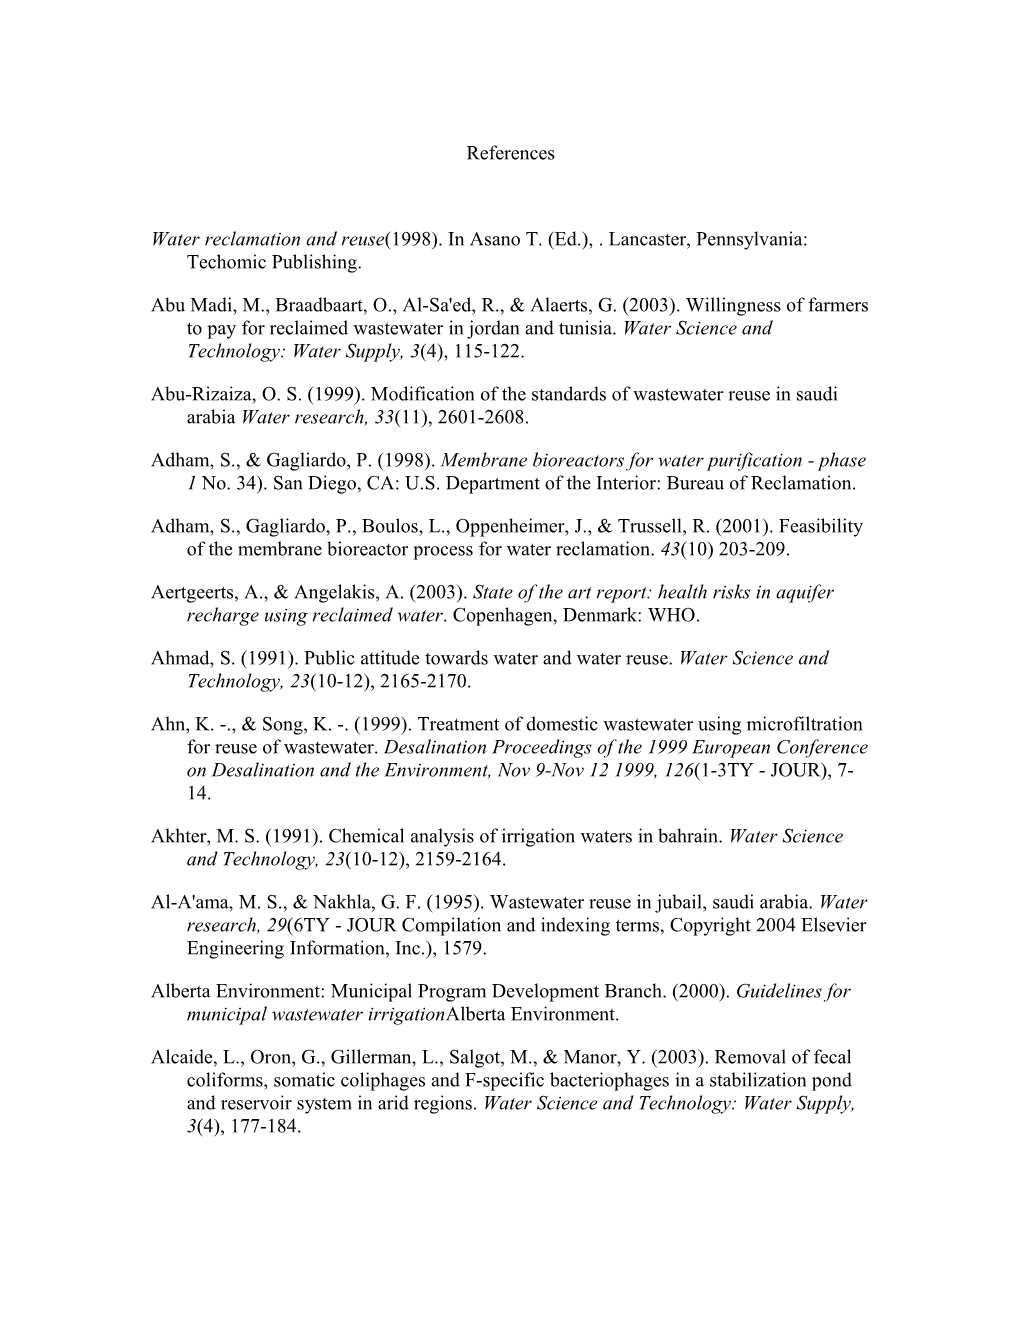 Water Reclamation and Reuse(1998). in Asano T. (Ed.), . Lancaster, Pennsylvania: Techomic